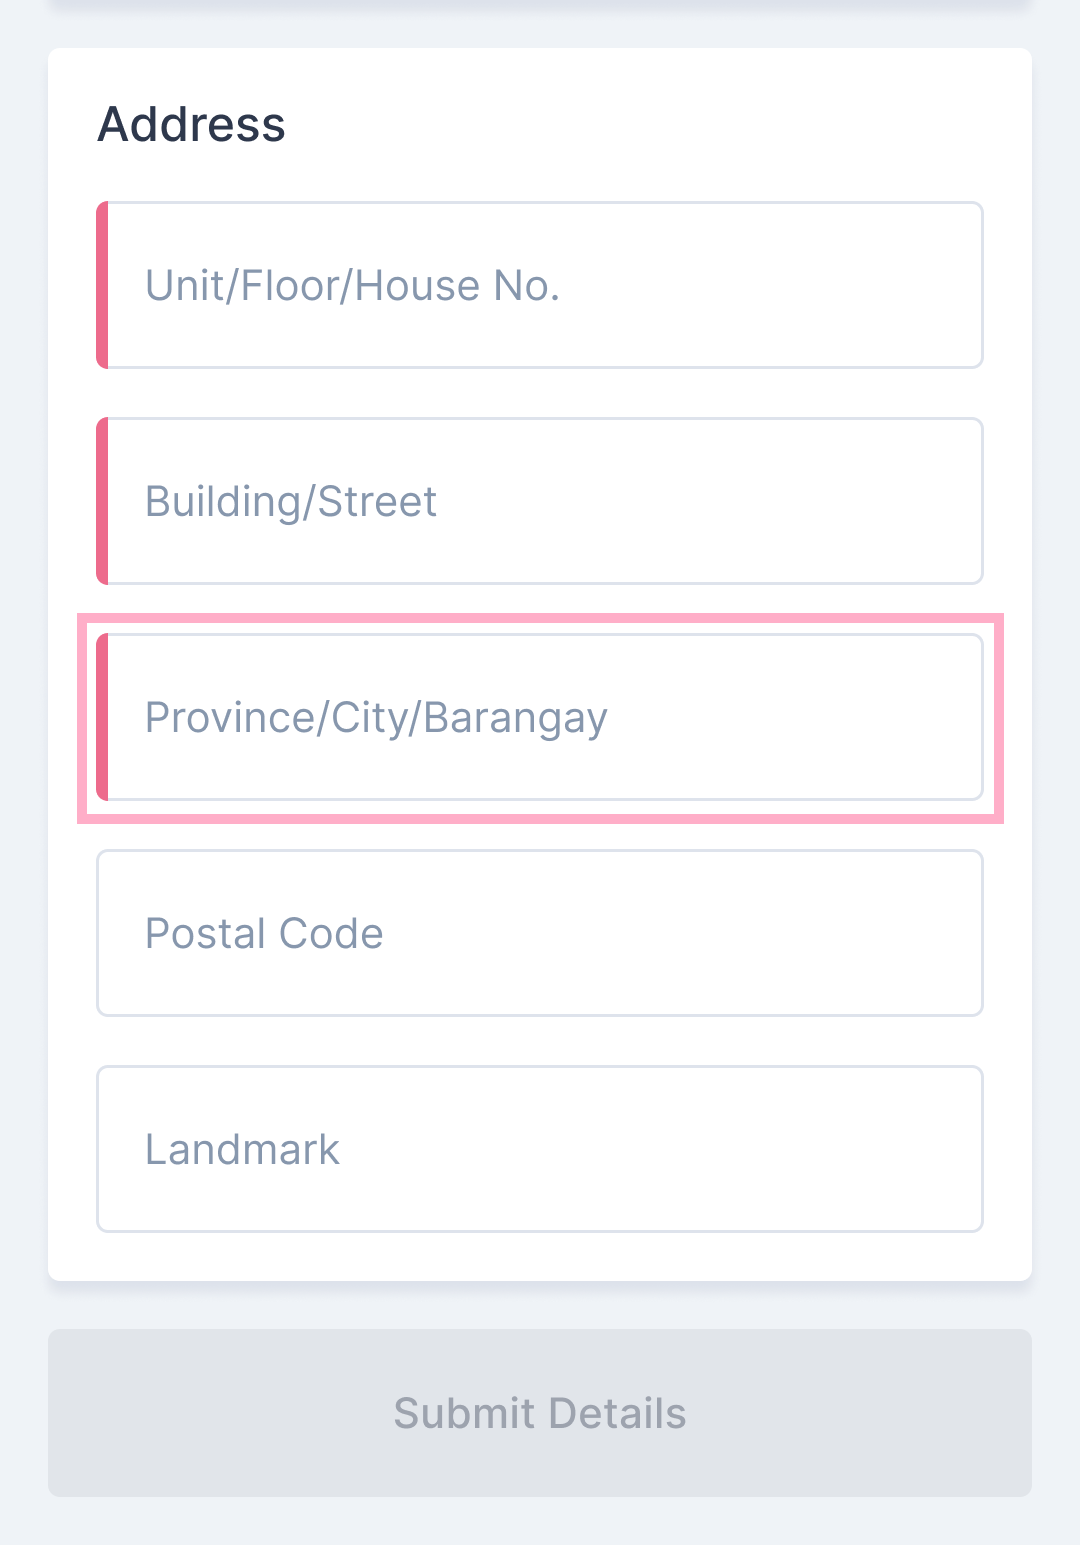 add drop-off details - province, city, barangay